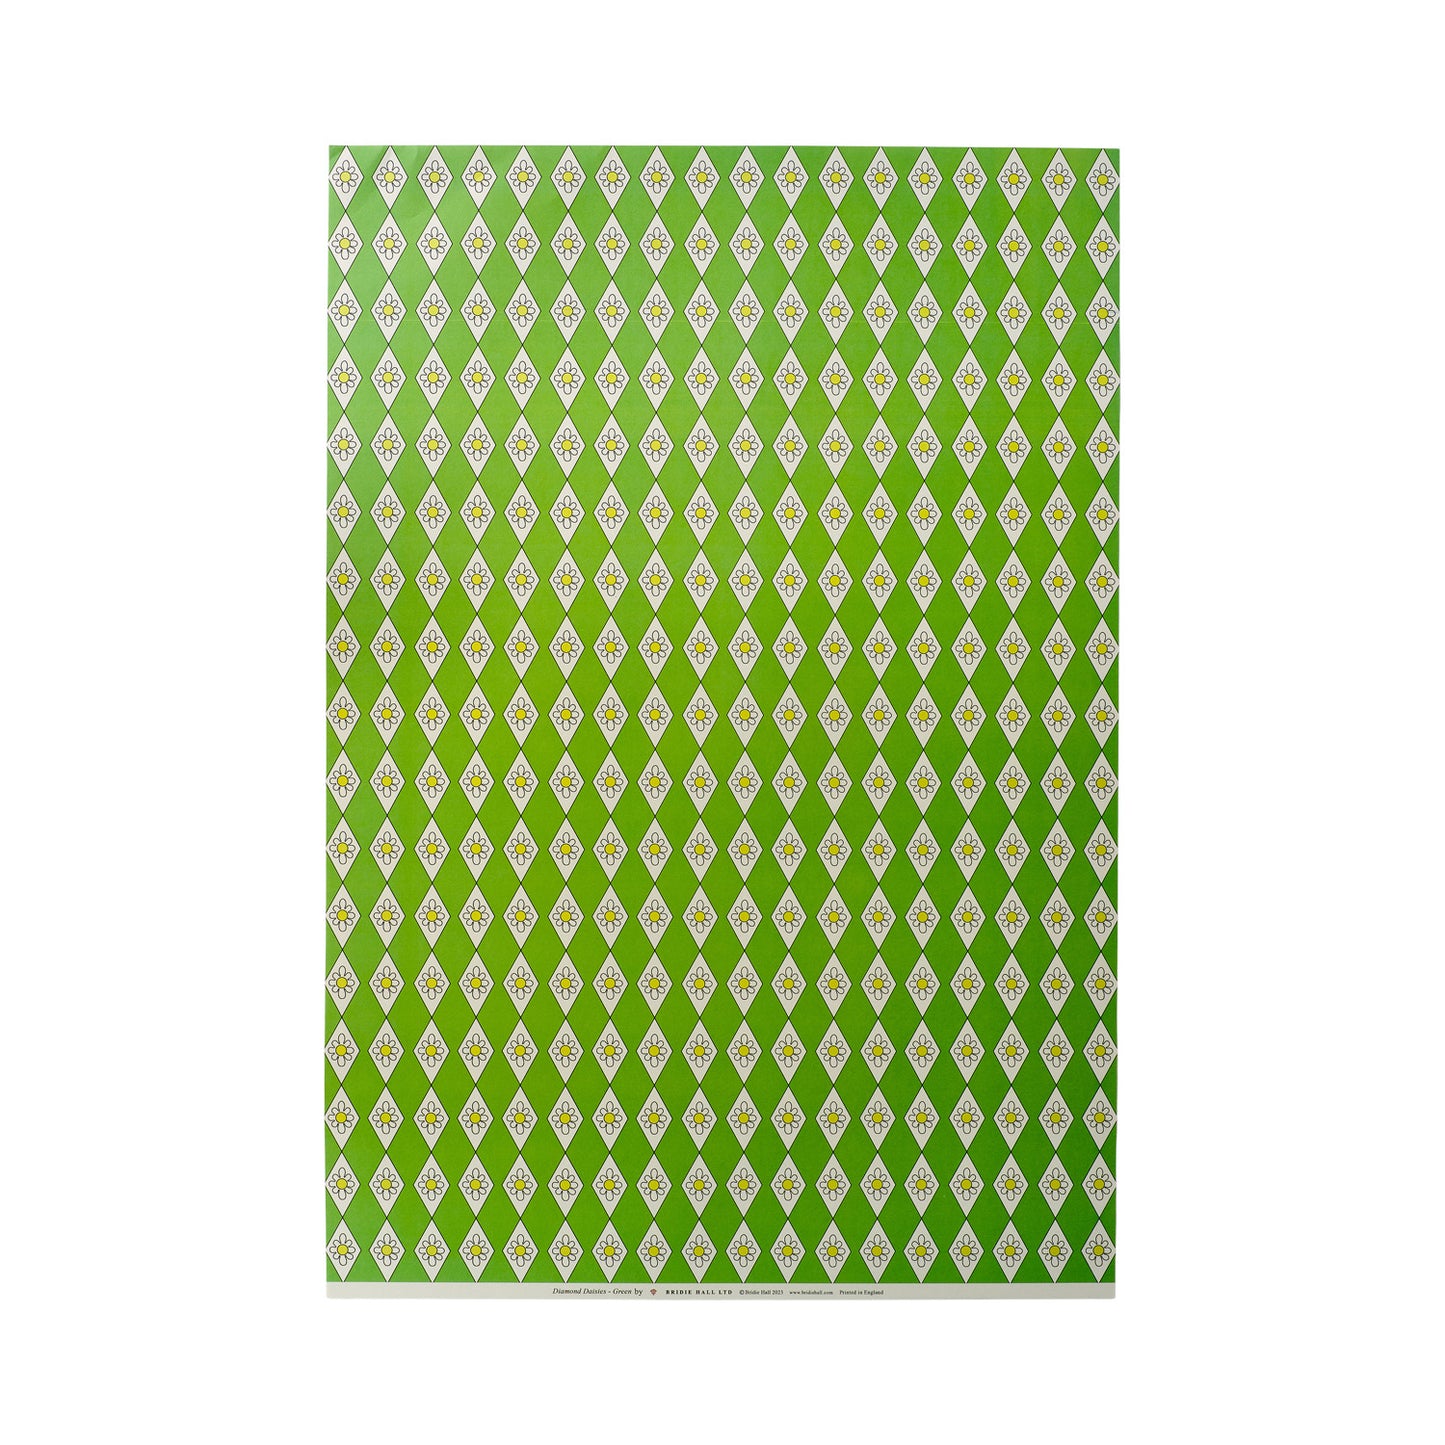 Diamond Daisy Patterned Paper - Green